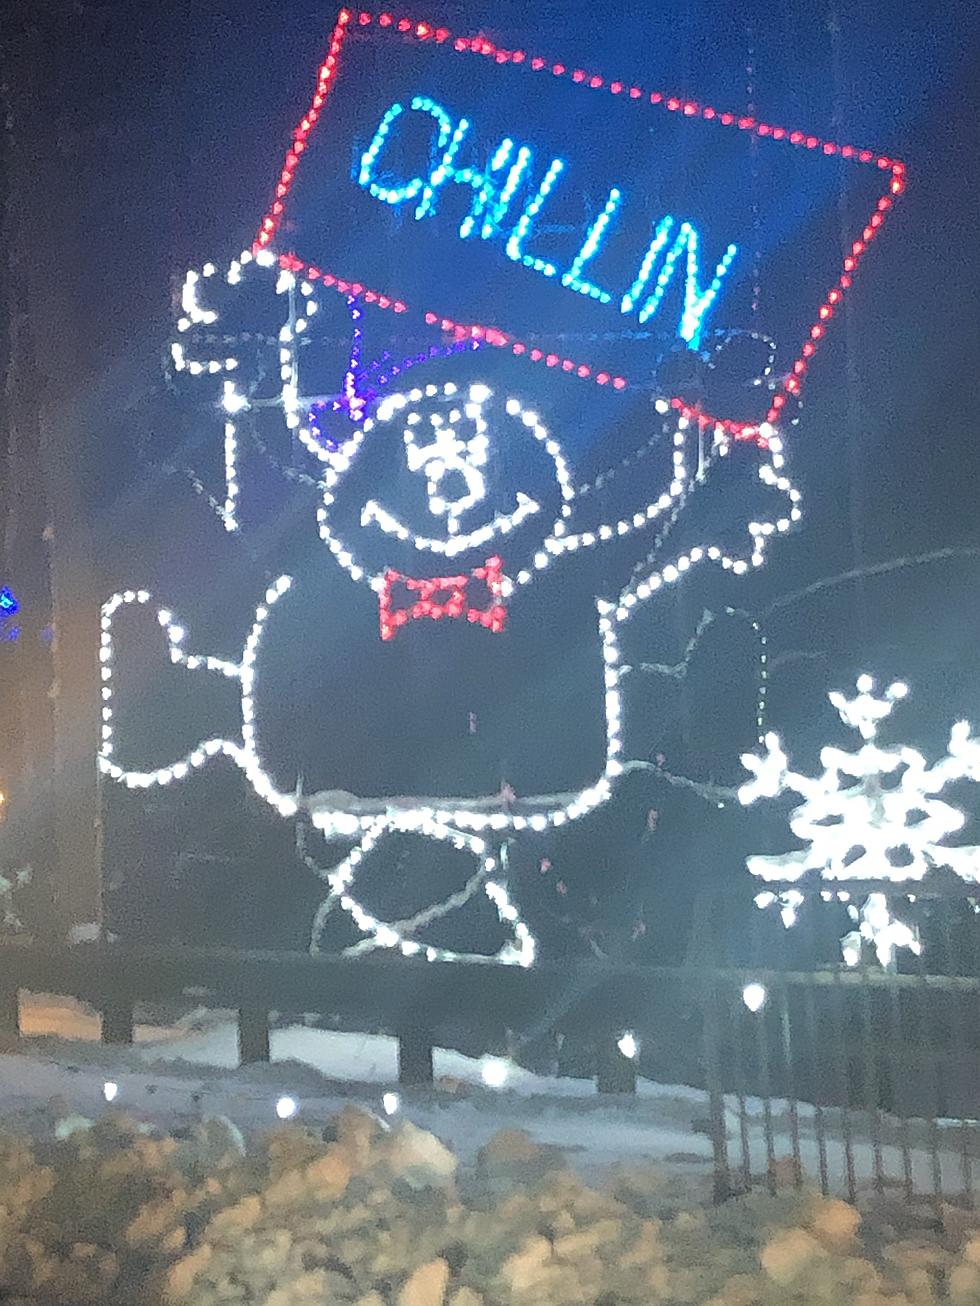 Stunning Magic of Lights Christmas Drive Thru is Returning to NJ